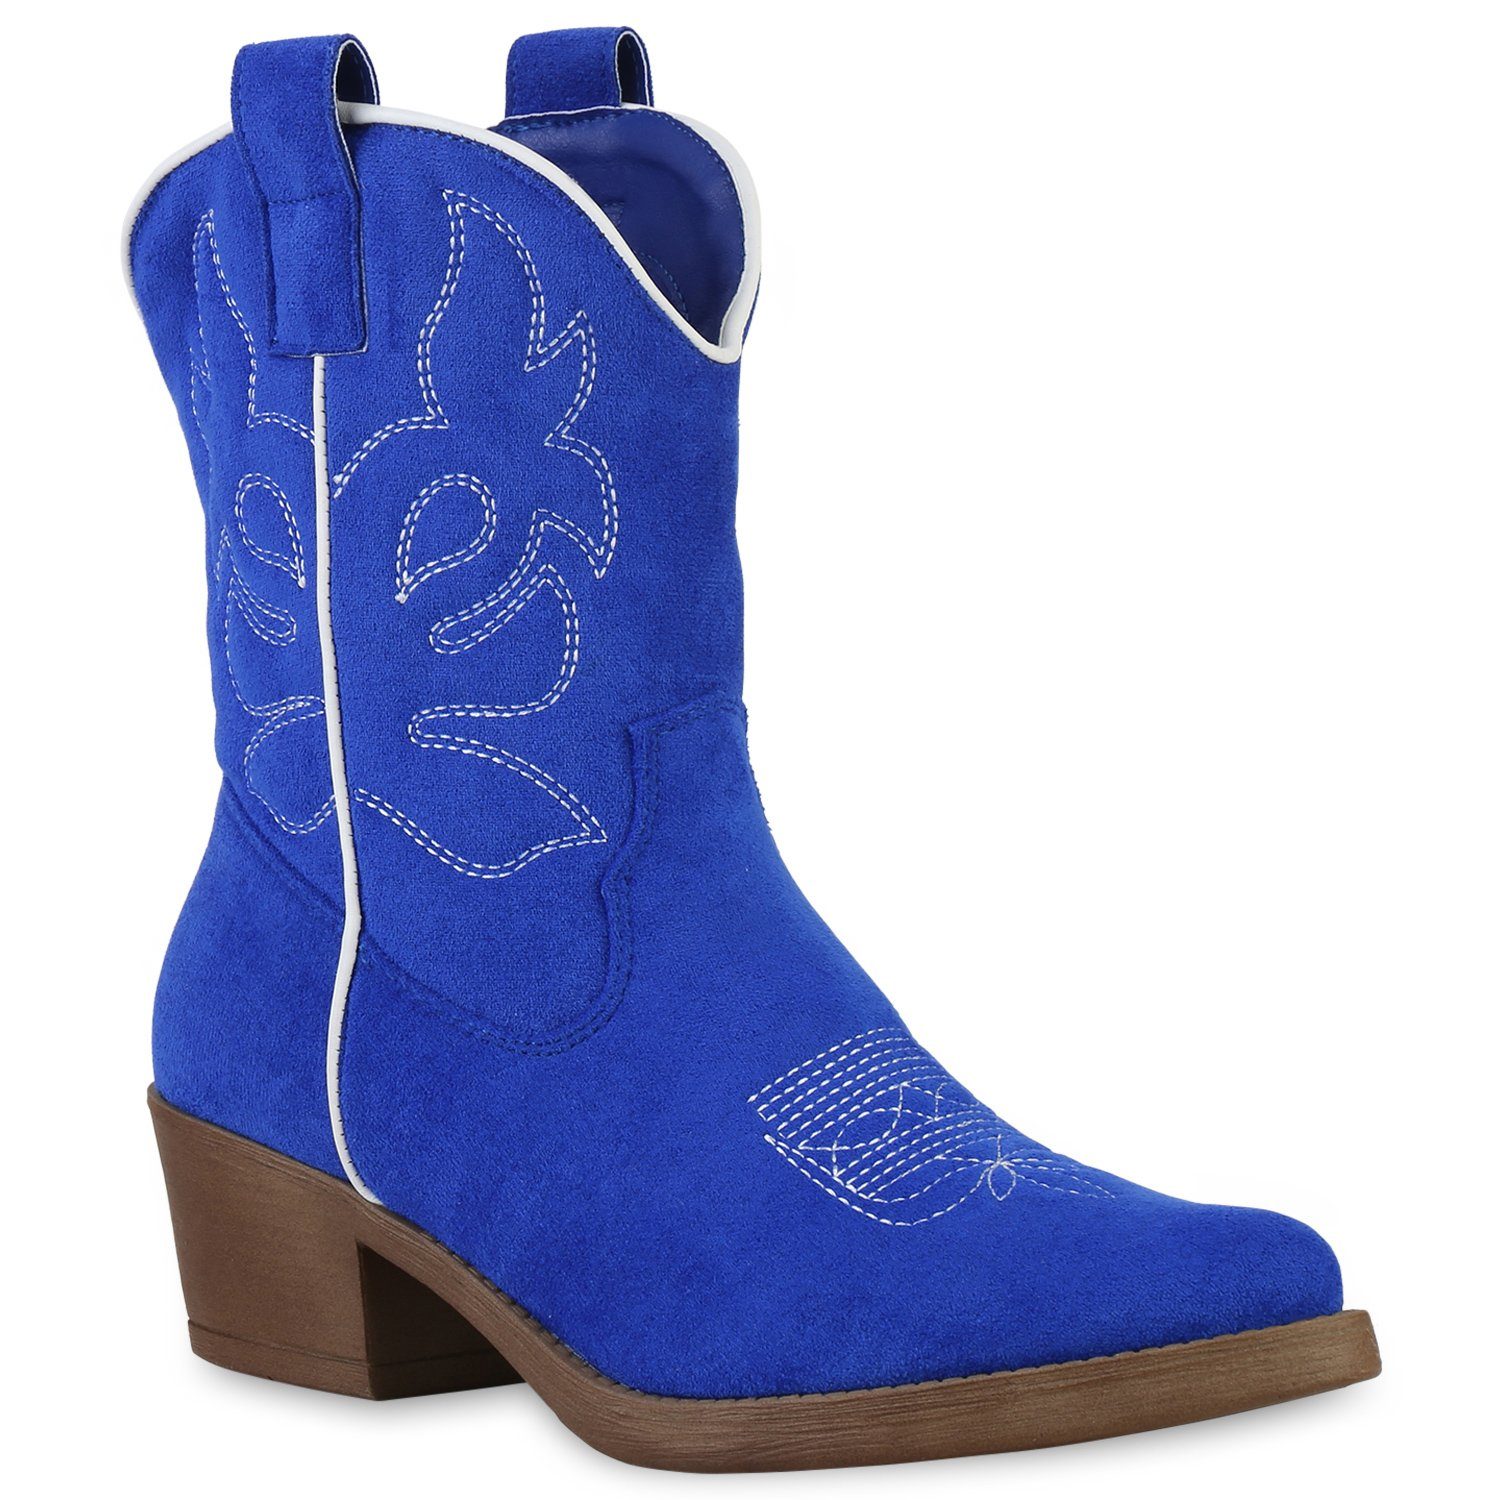 VAN HILL 840203 Cowboy Boots Schuhe Blau Velours